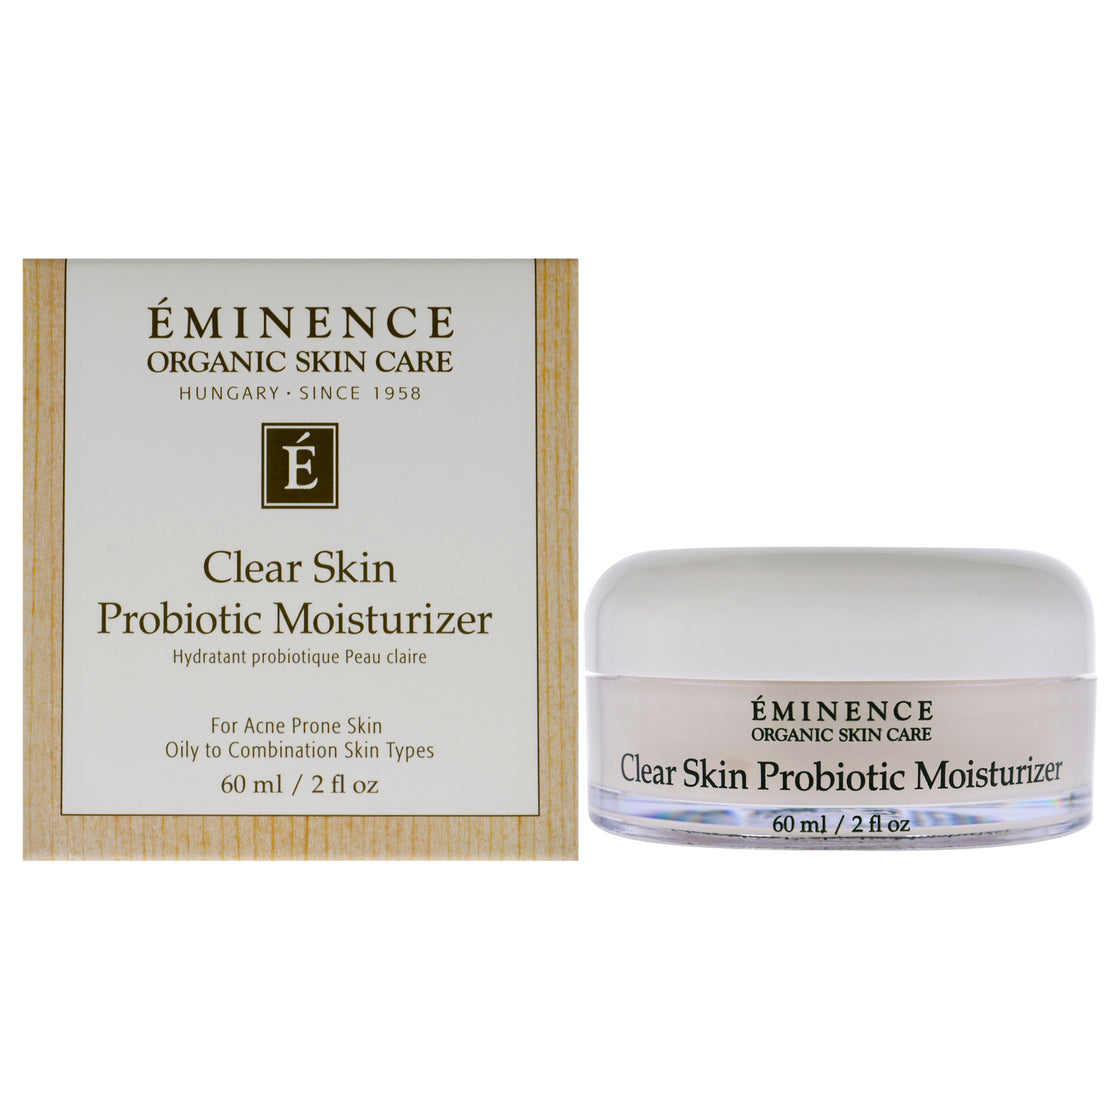 Clear Skin Probiotic Moisturizer by Eminence for Unisex - 2 oz Moisturizer